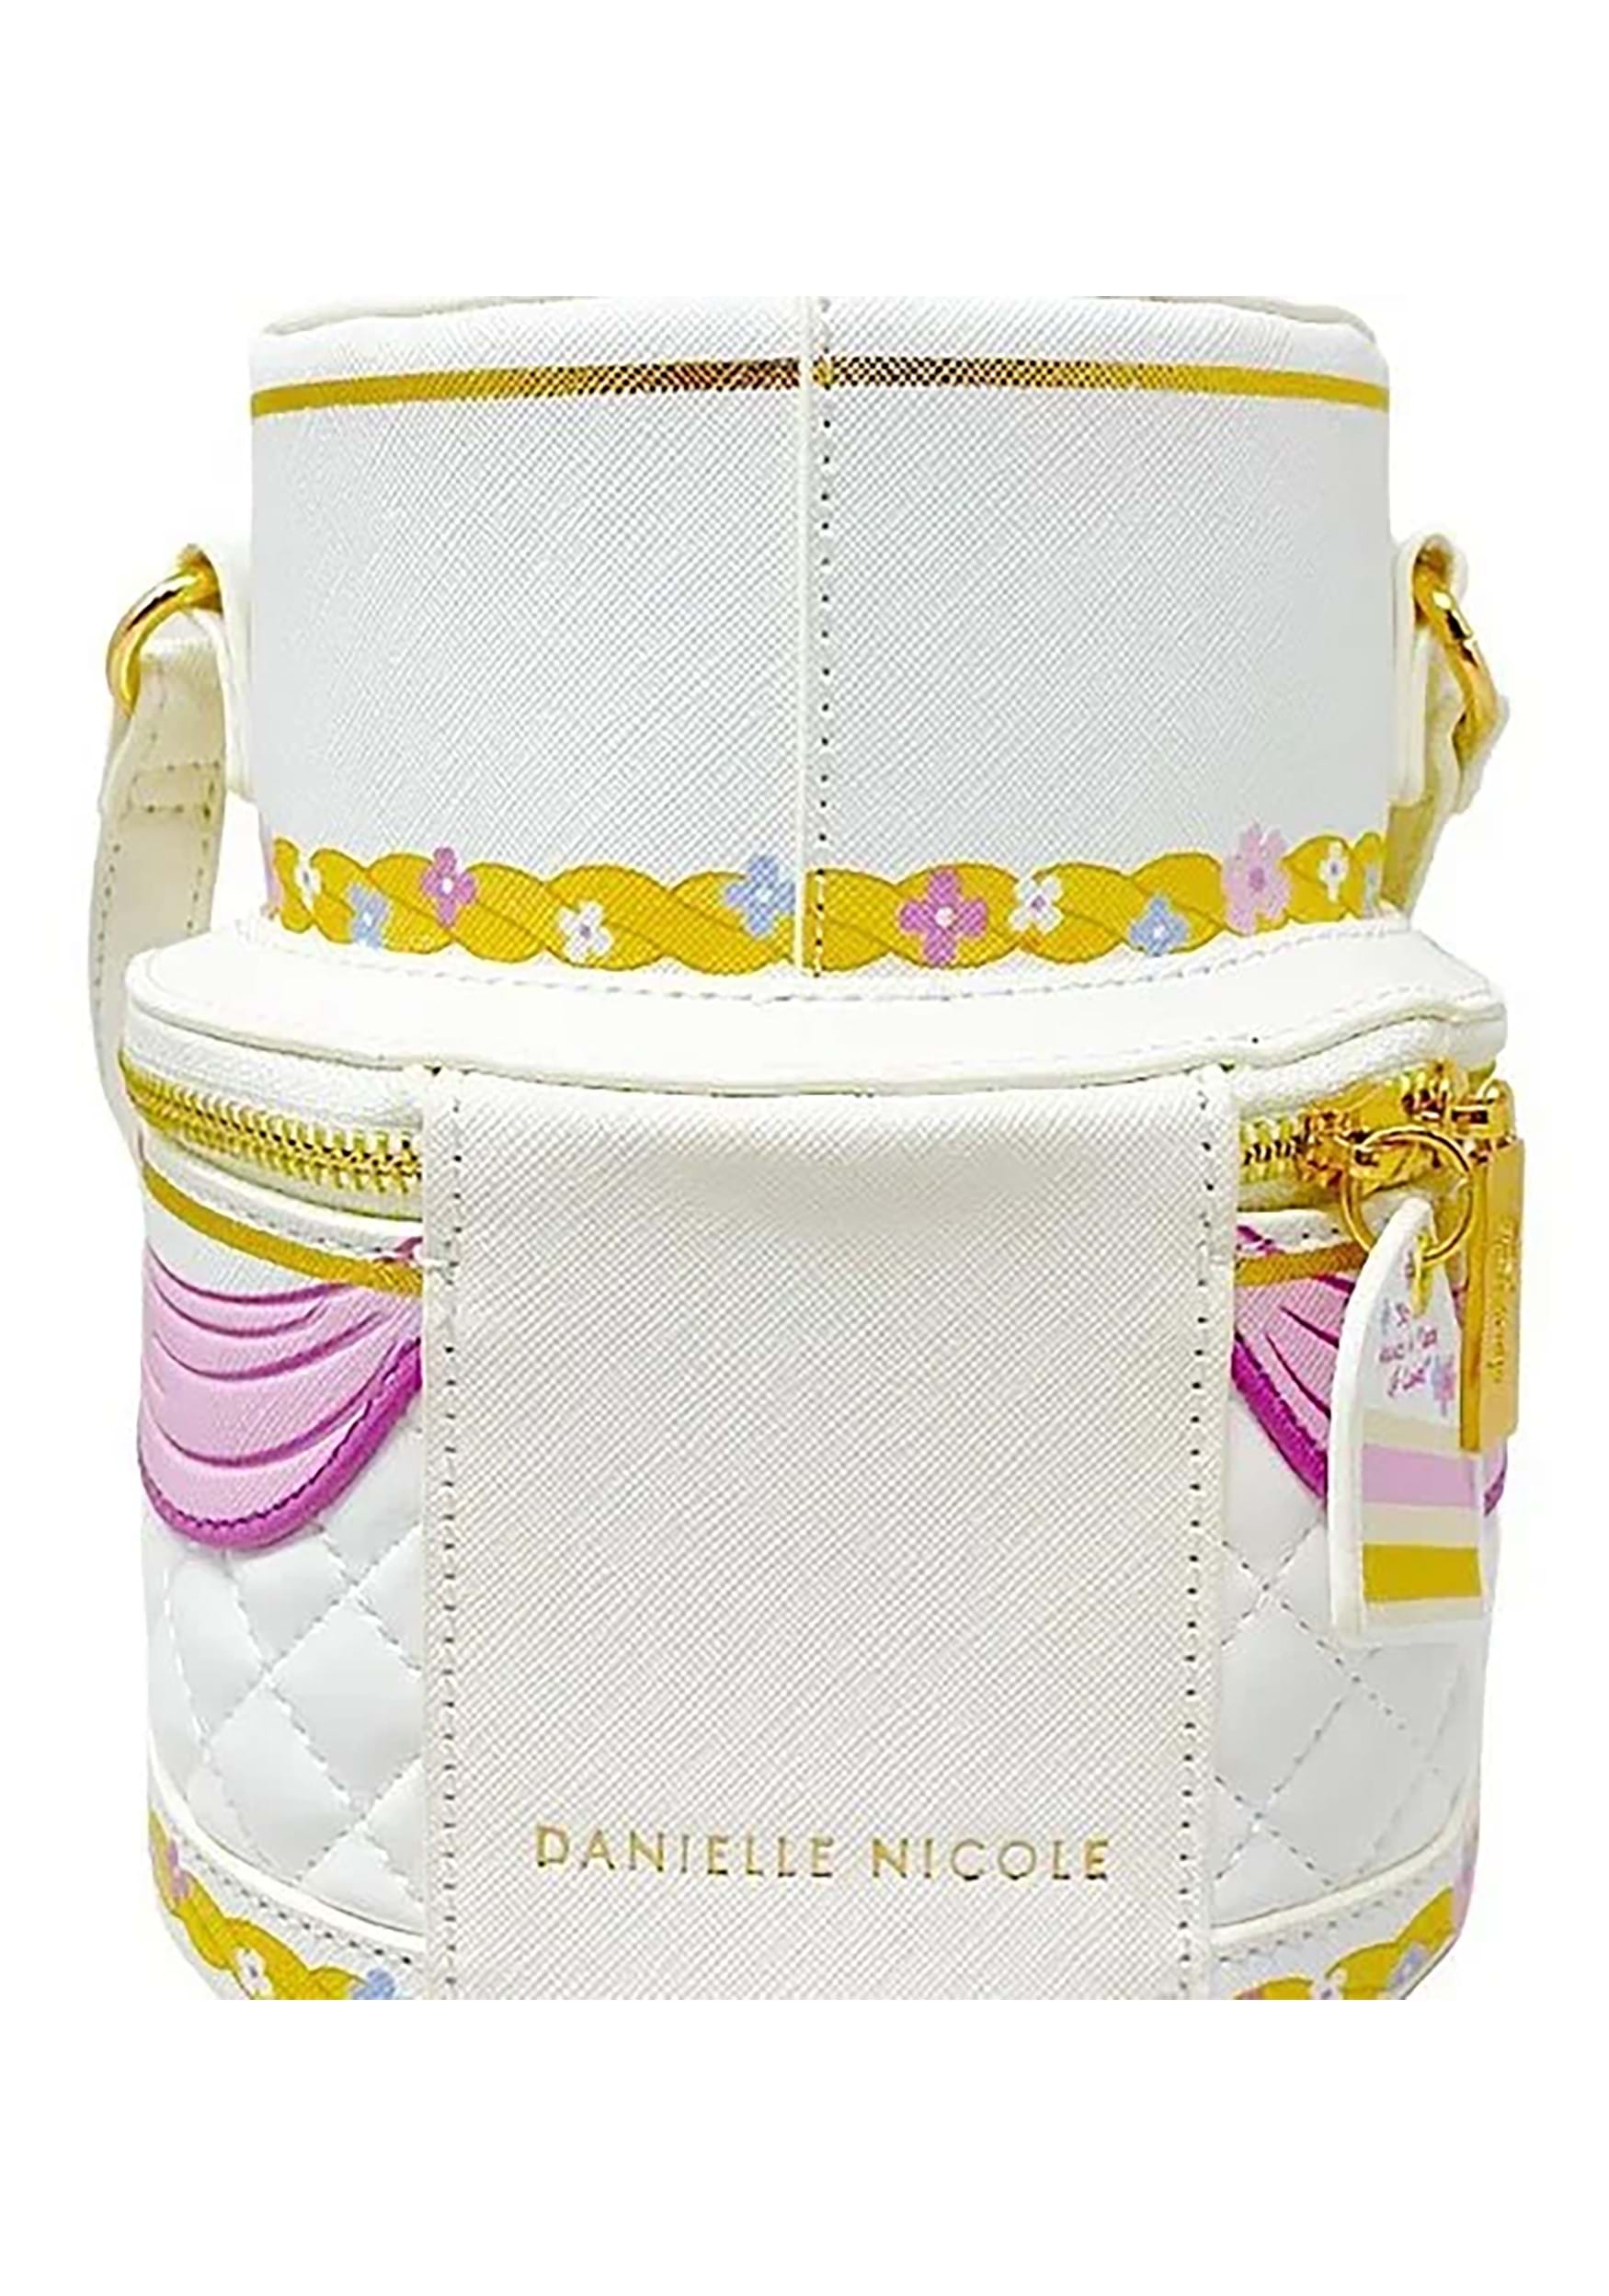 Tangled Wedding Cake Danielle Nicole Crossbody Bag